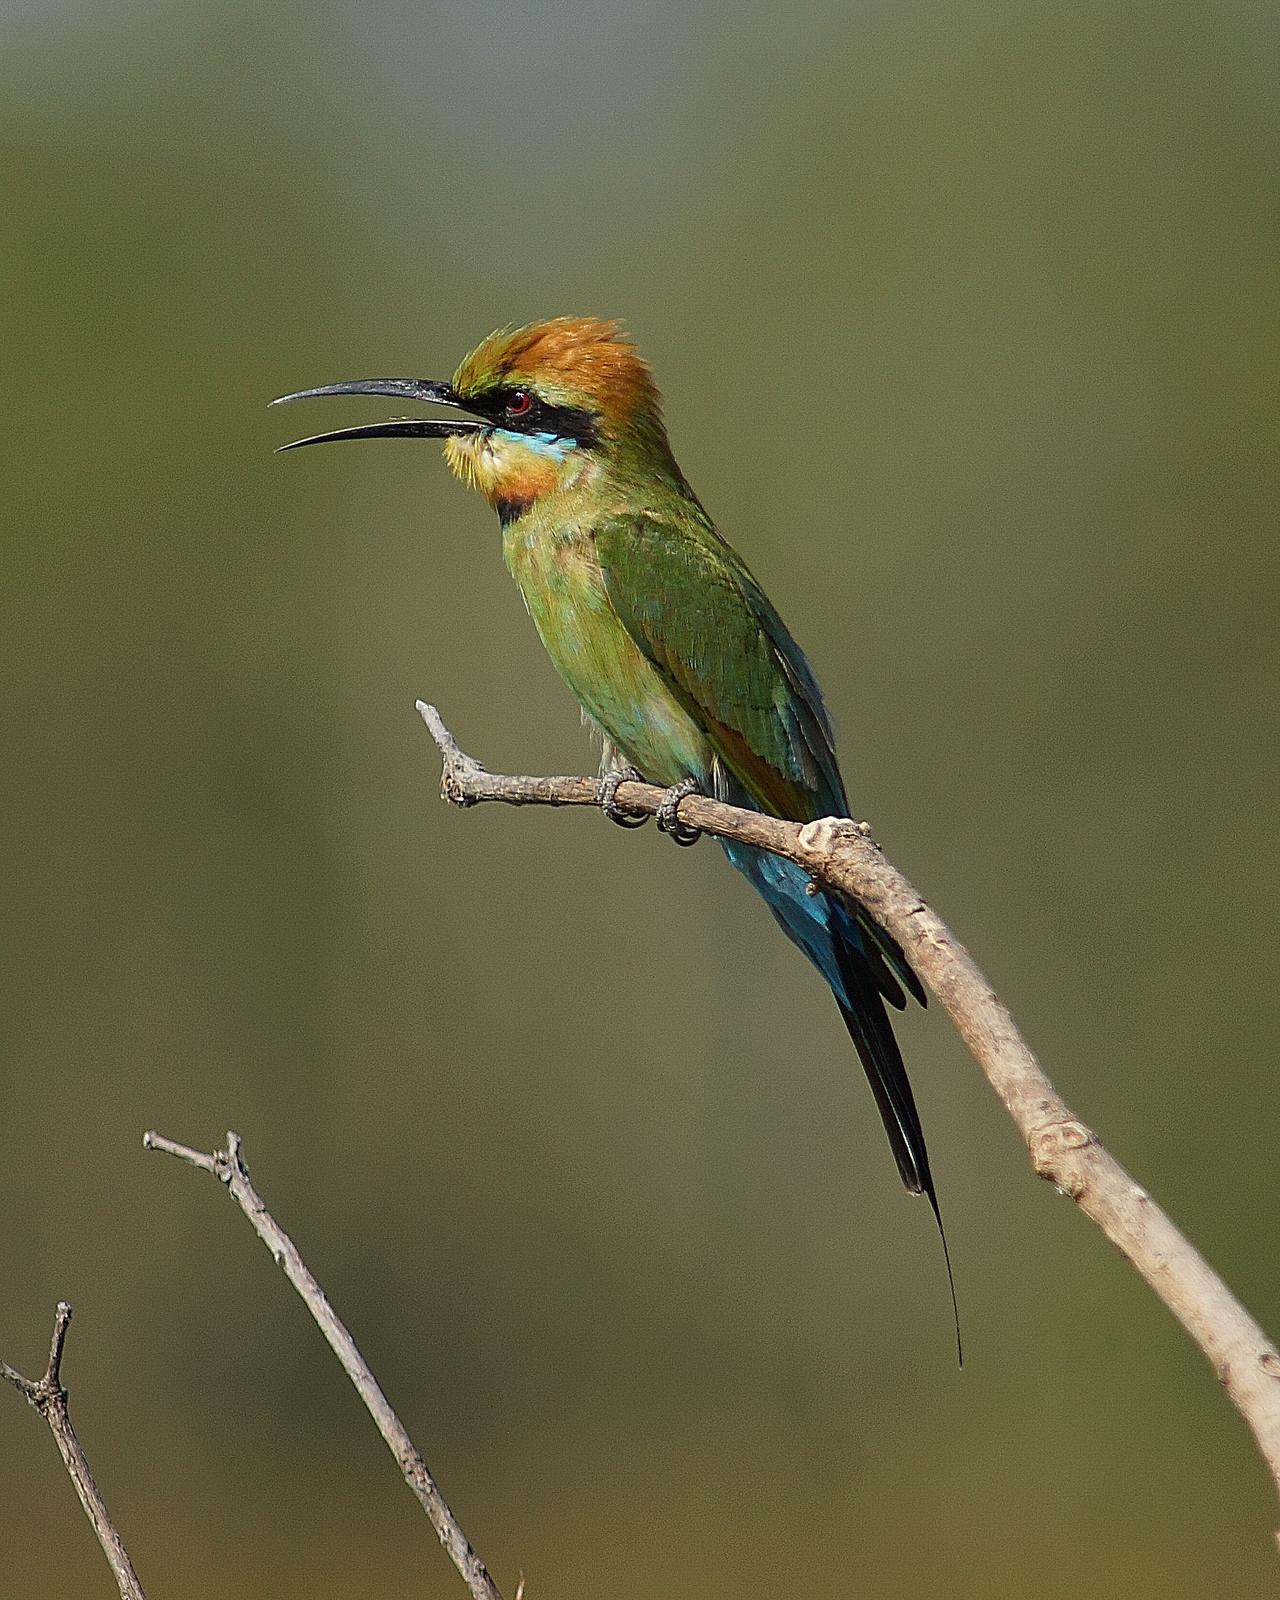 Rainbow Bee-eater Photo by Steve Percival